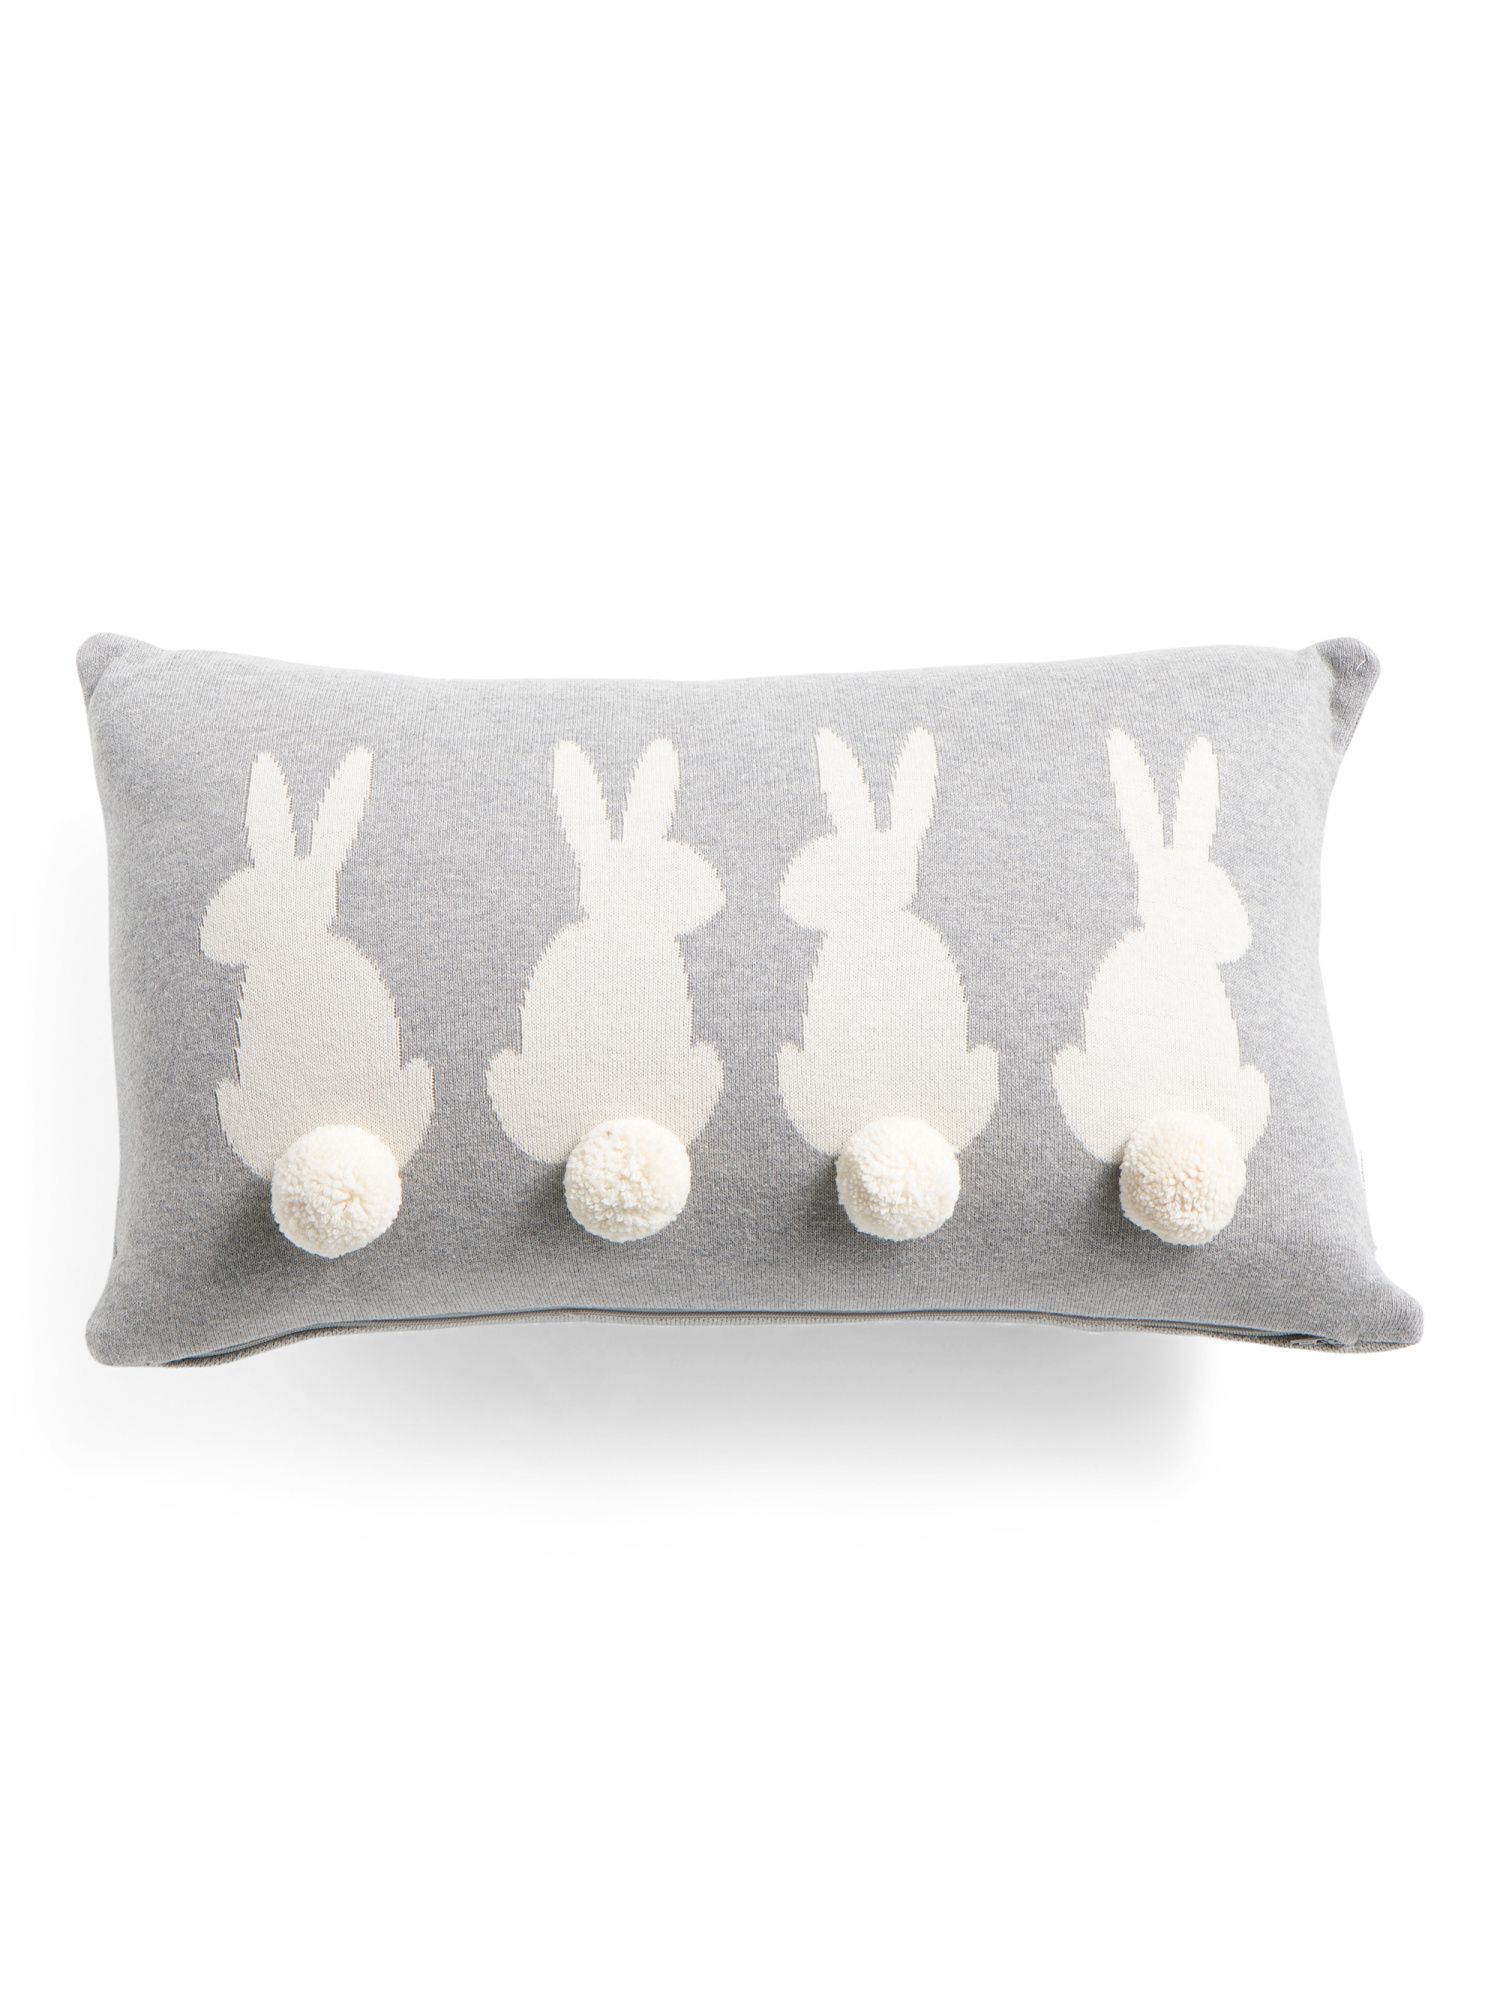 12x20 Knit 4 Bunnies Pillow With Pom Poms | The Global Decor Shop | Marshalls | Marshalls